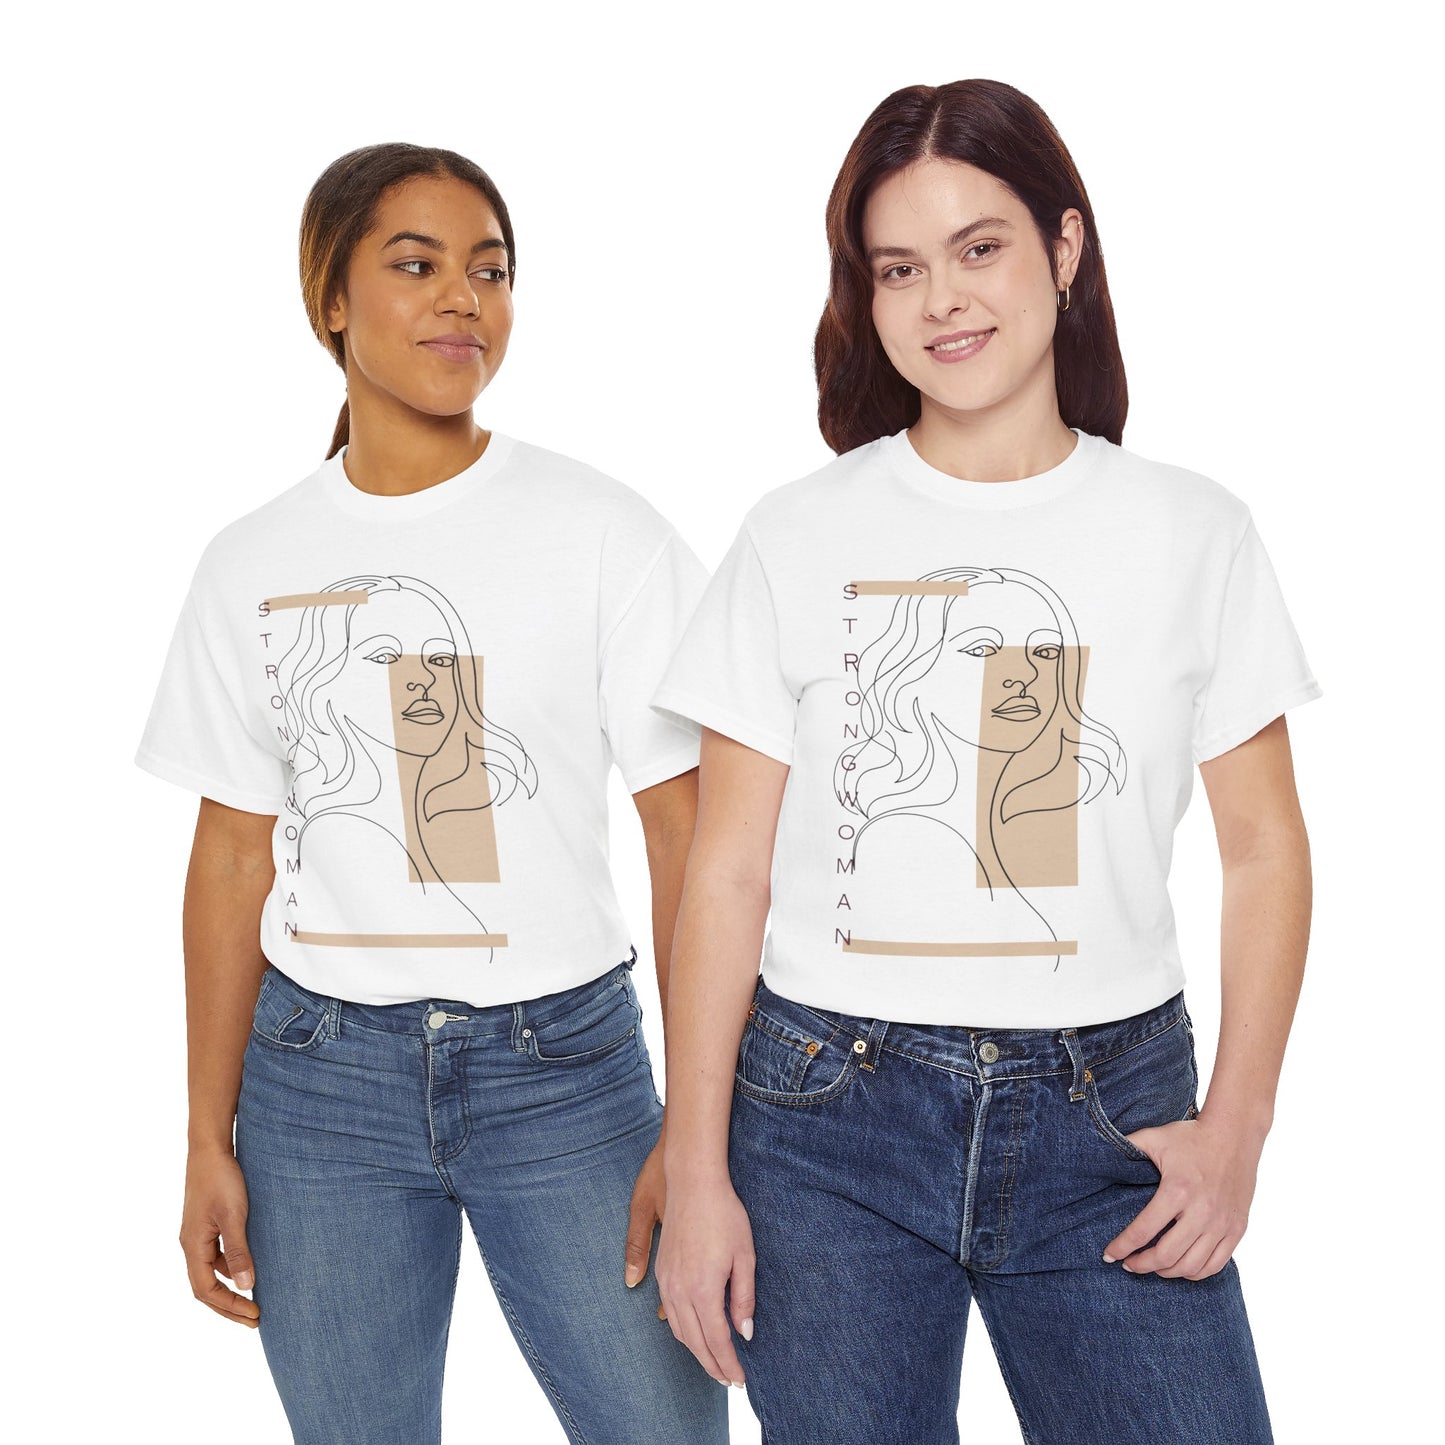 Unisex Heavy Cotton (Strong Woman) T-shirt